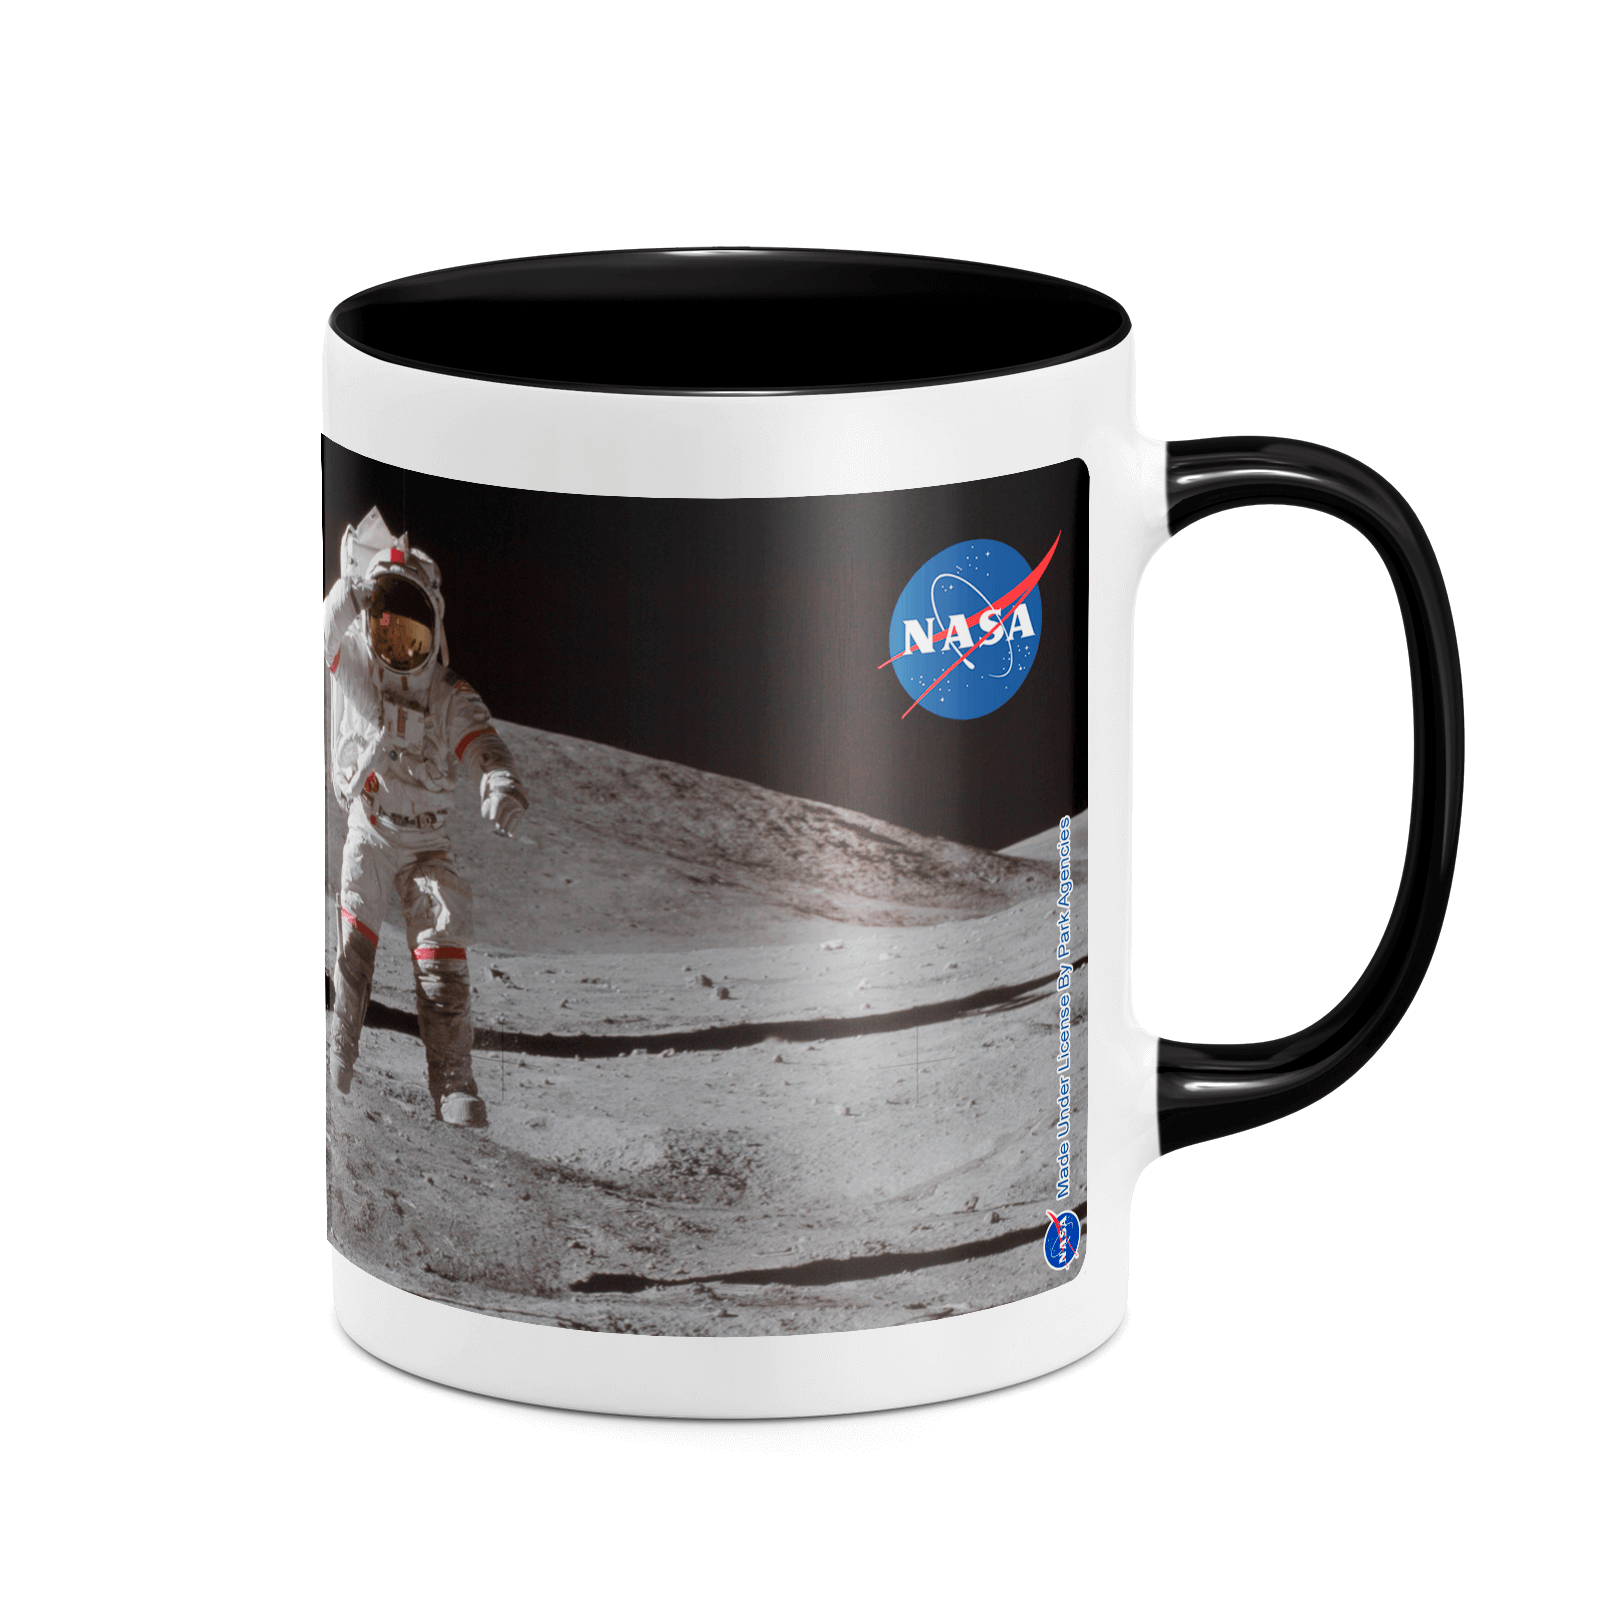 NASA Moon And Flag Mug - White/Black